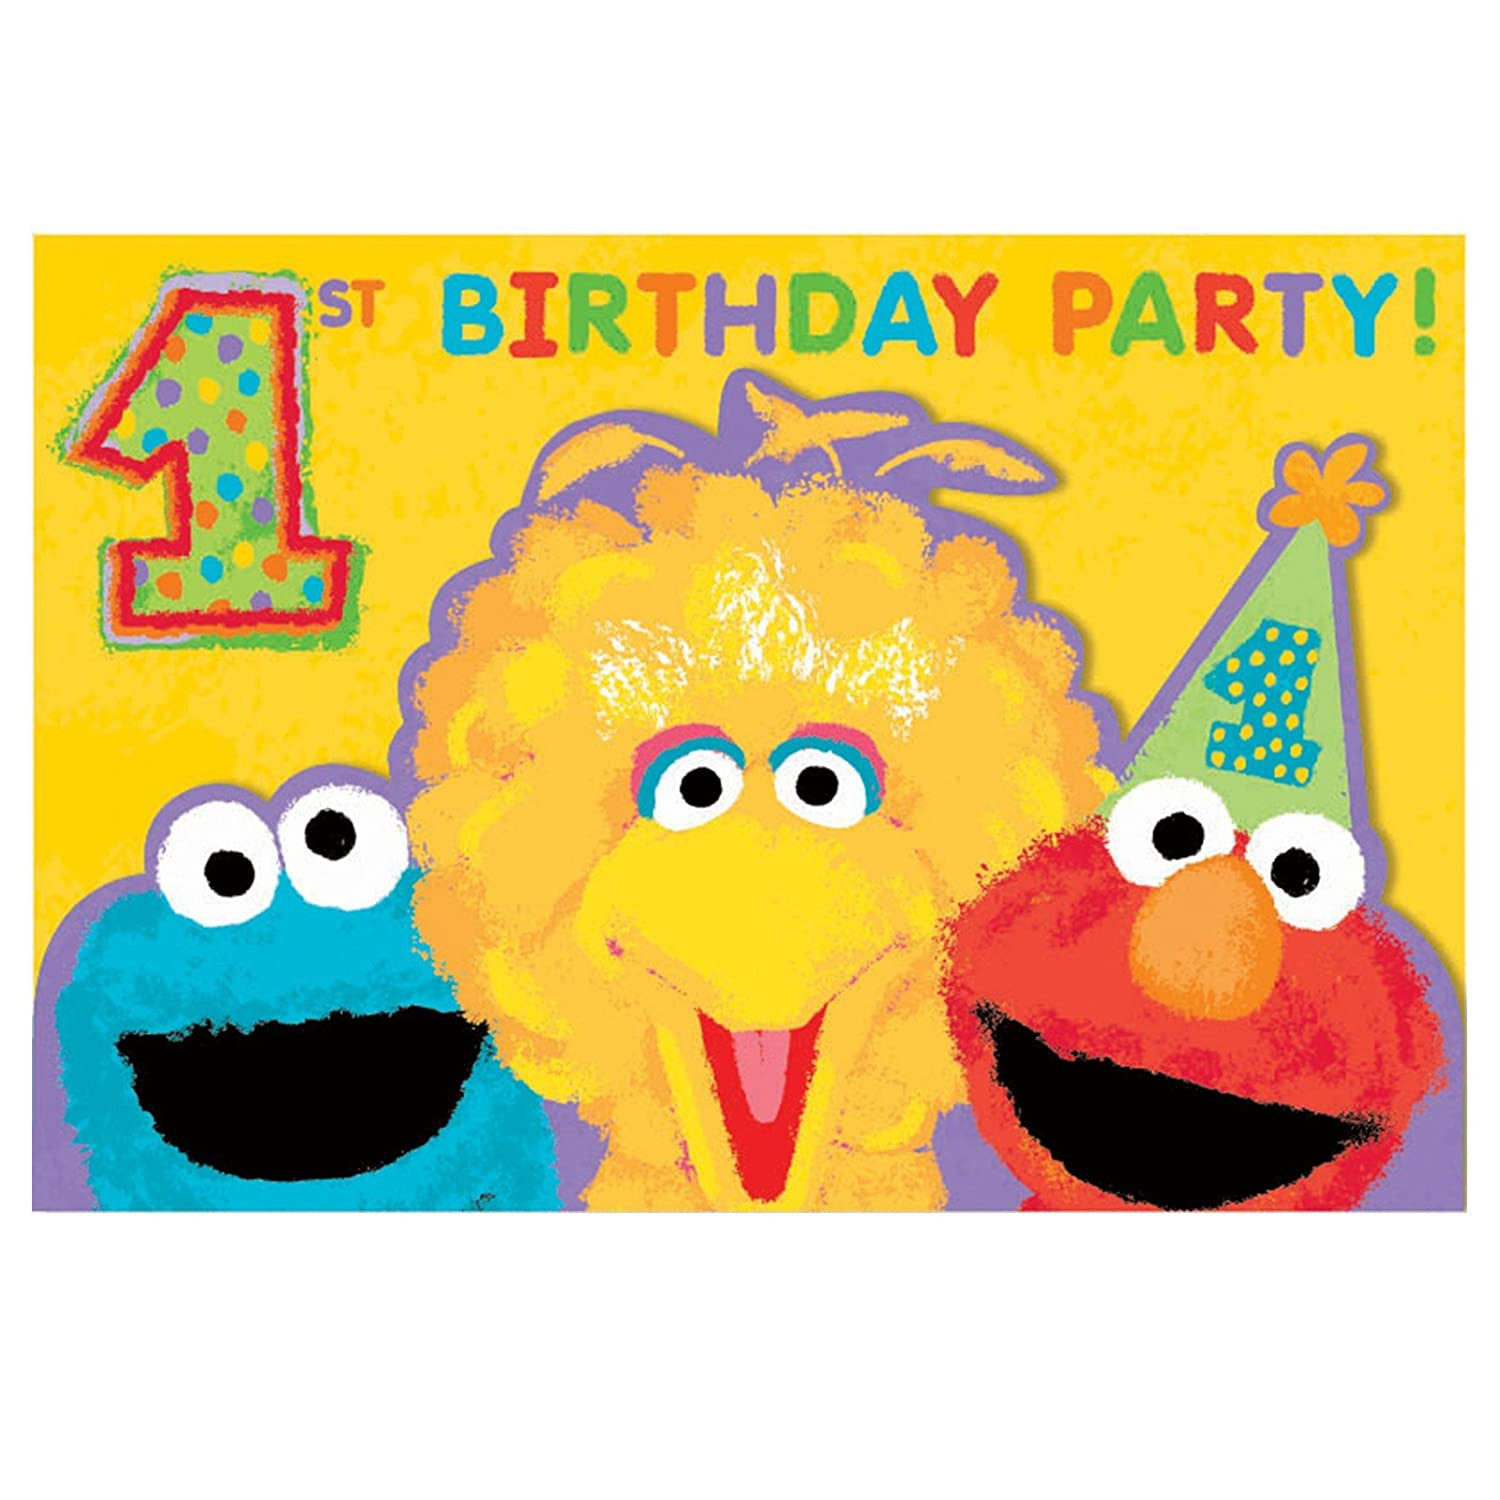 Sesame Street Birthday Party Supplies
 Sesame Street First Birthday Party Supplies